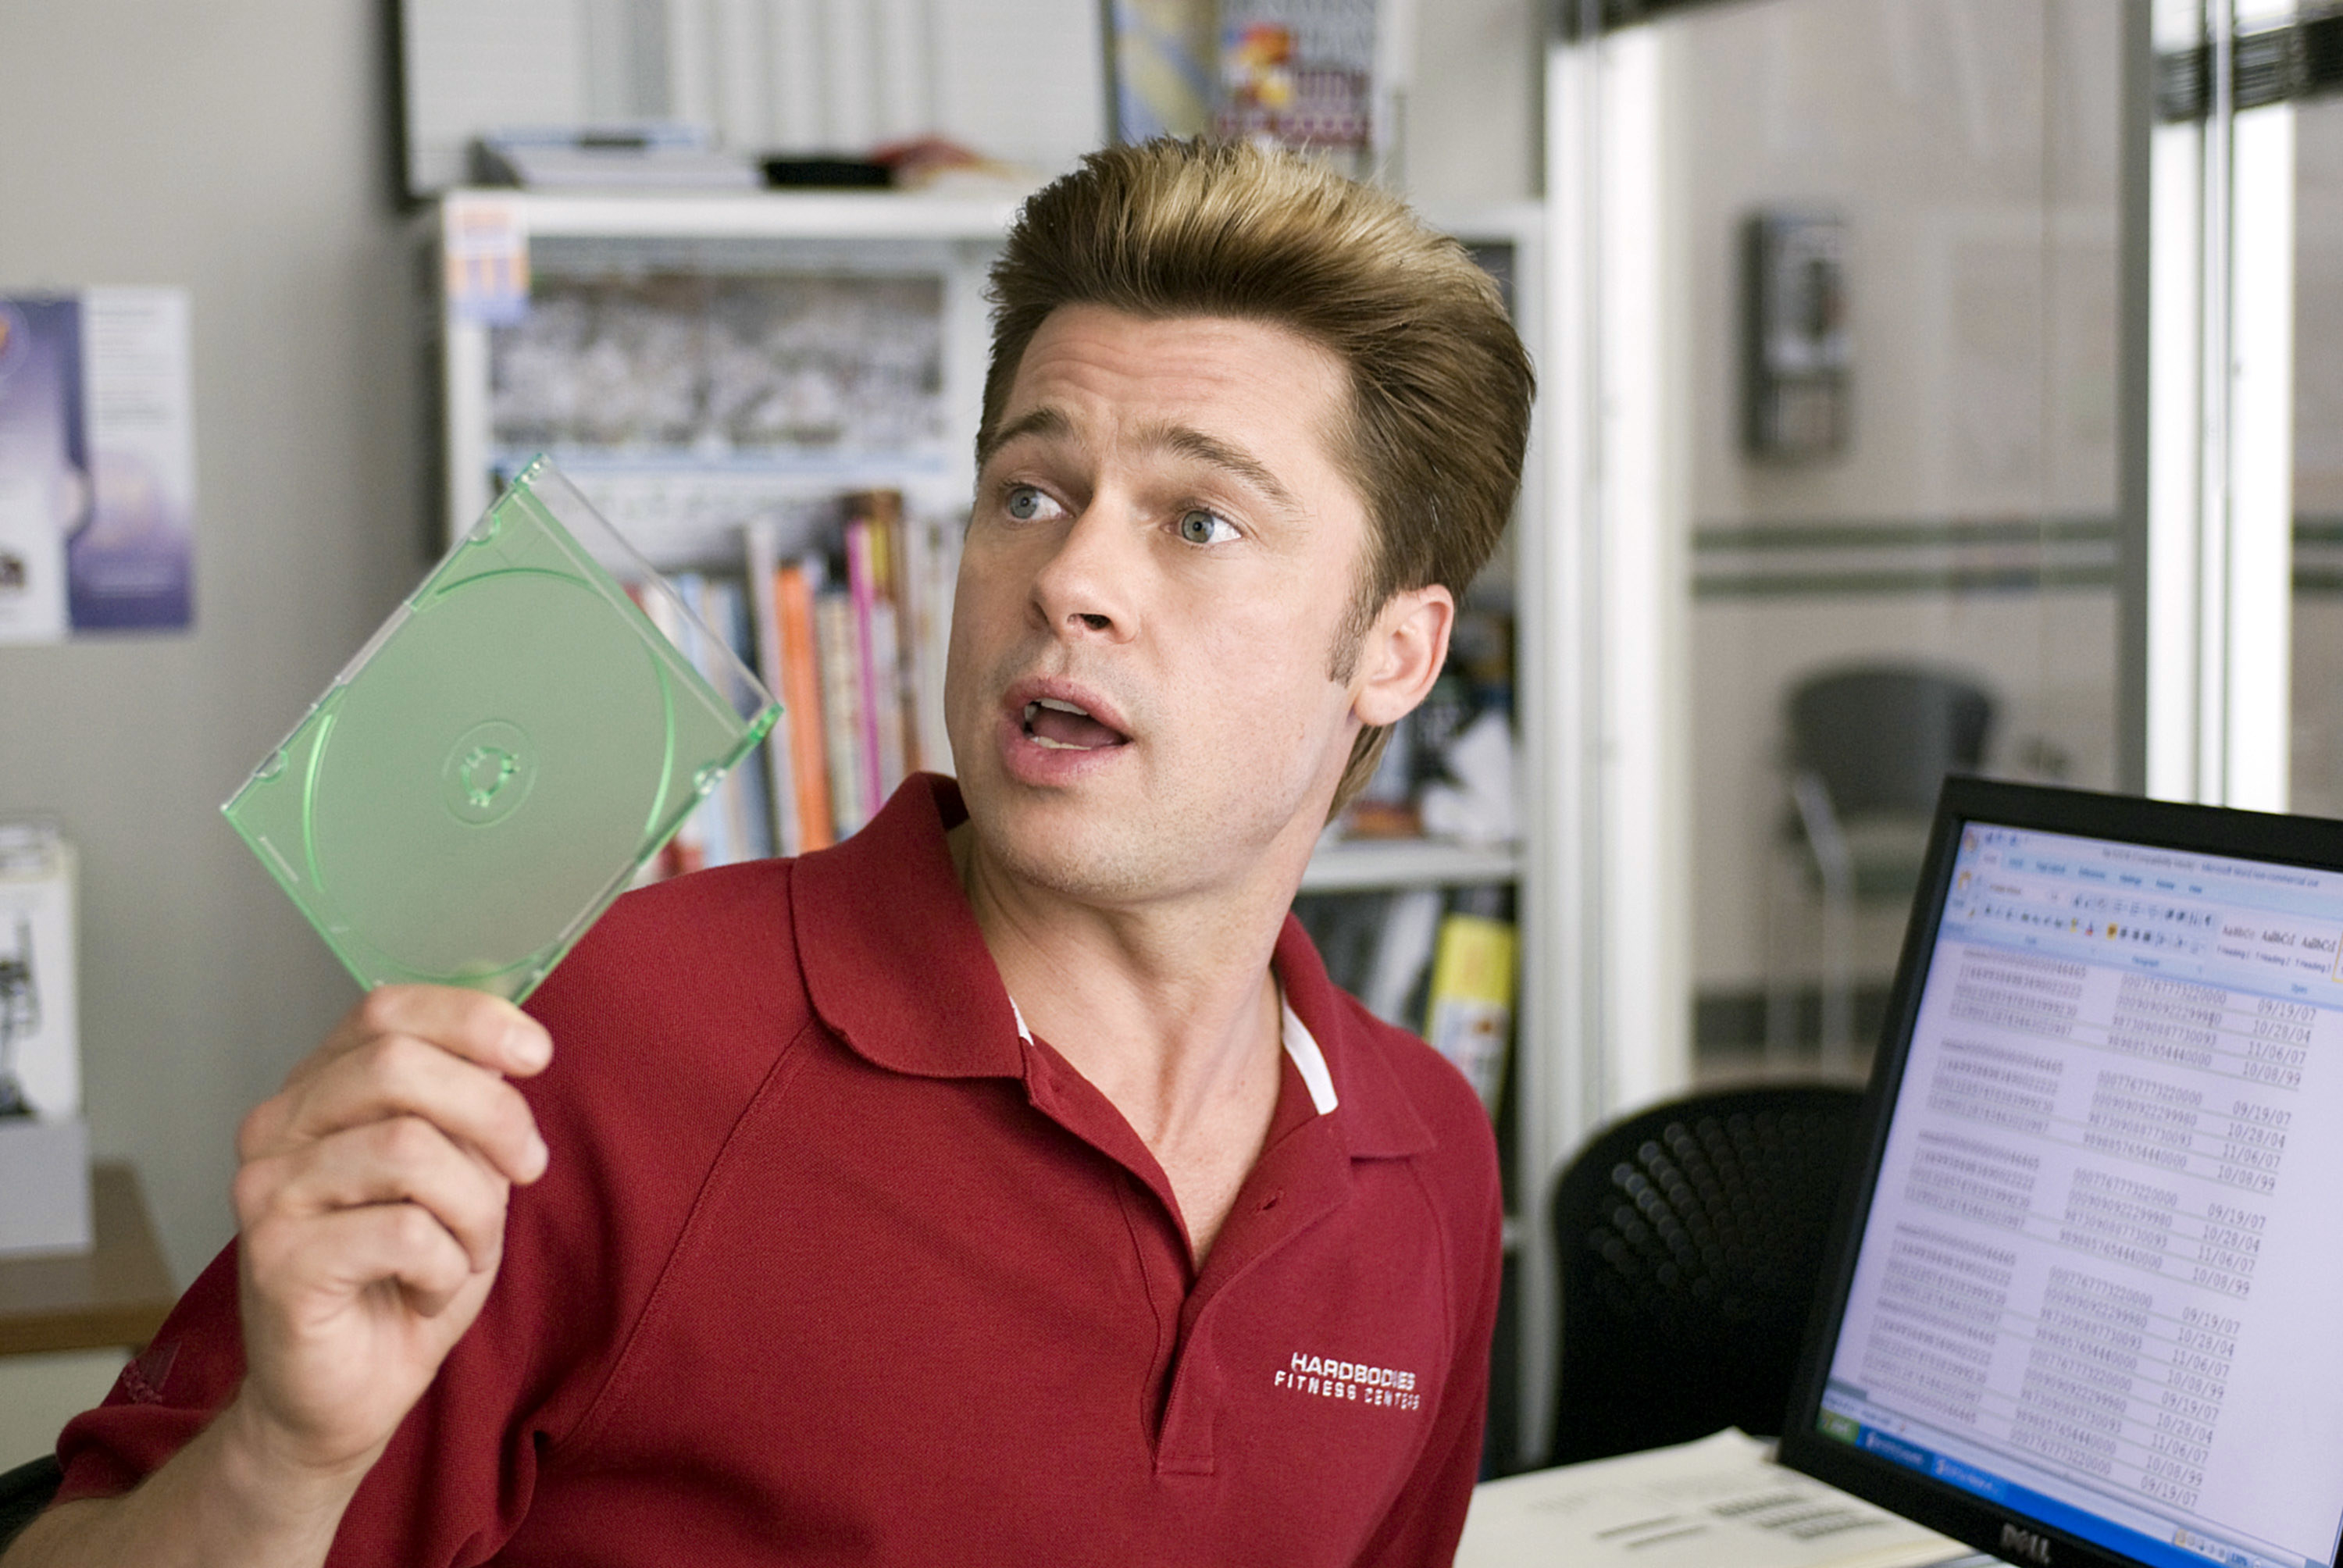 Brad Pitt holding up a CD case